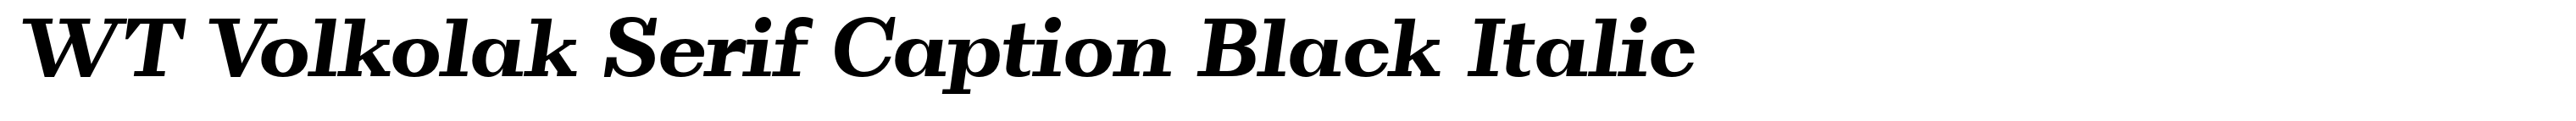 WT Volkolak Serif Caption Black Italic